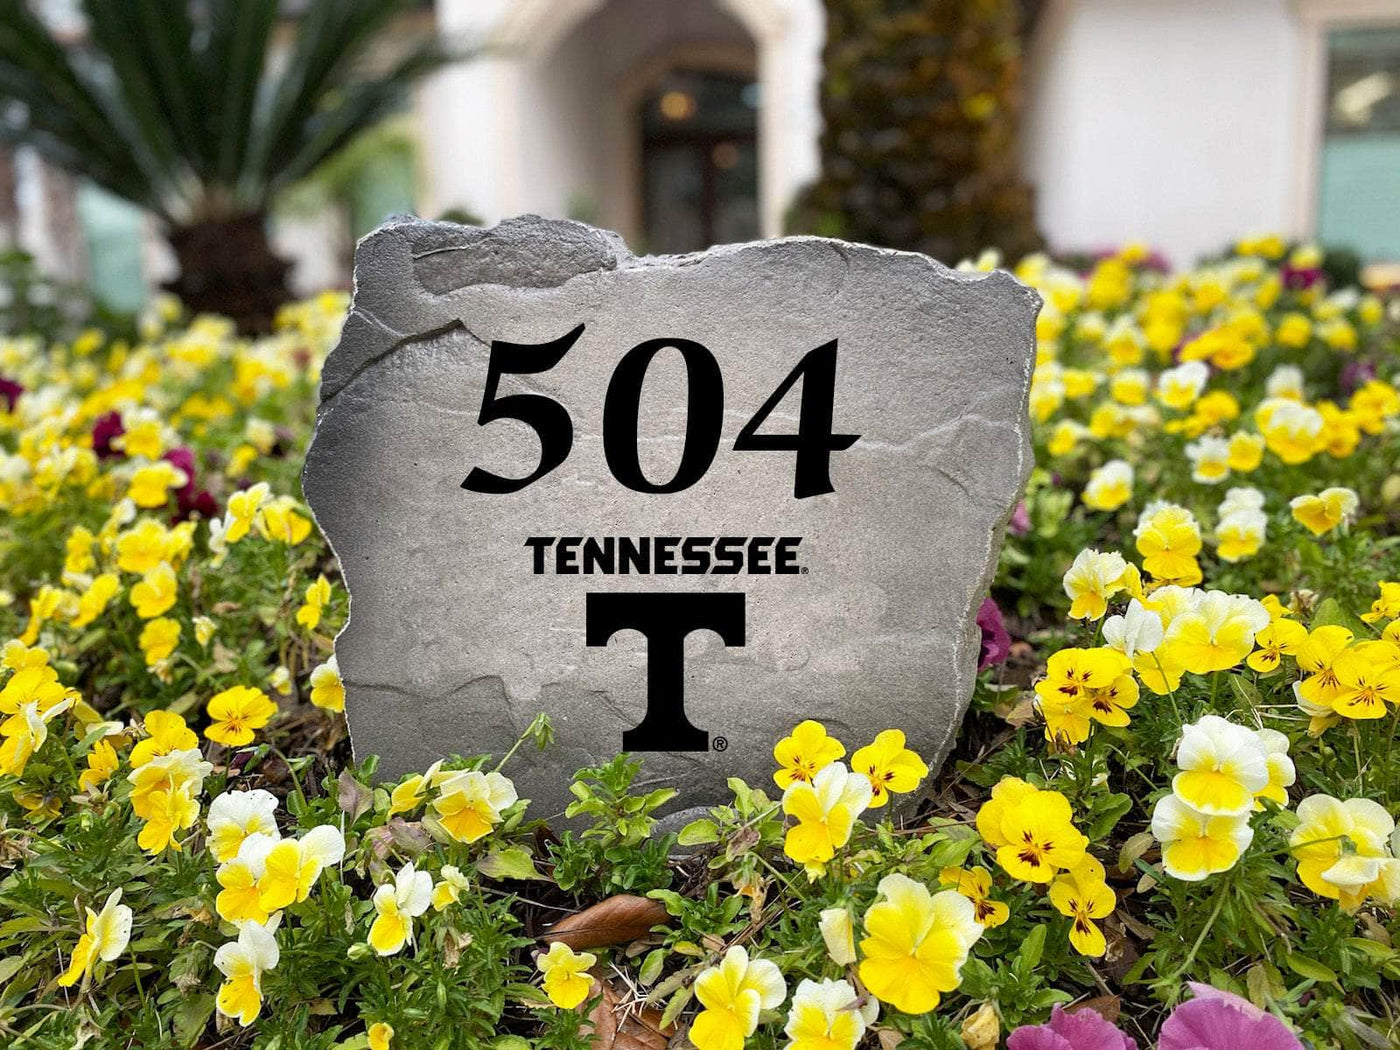 University Of Tennessee Address Stone